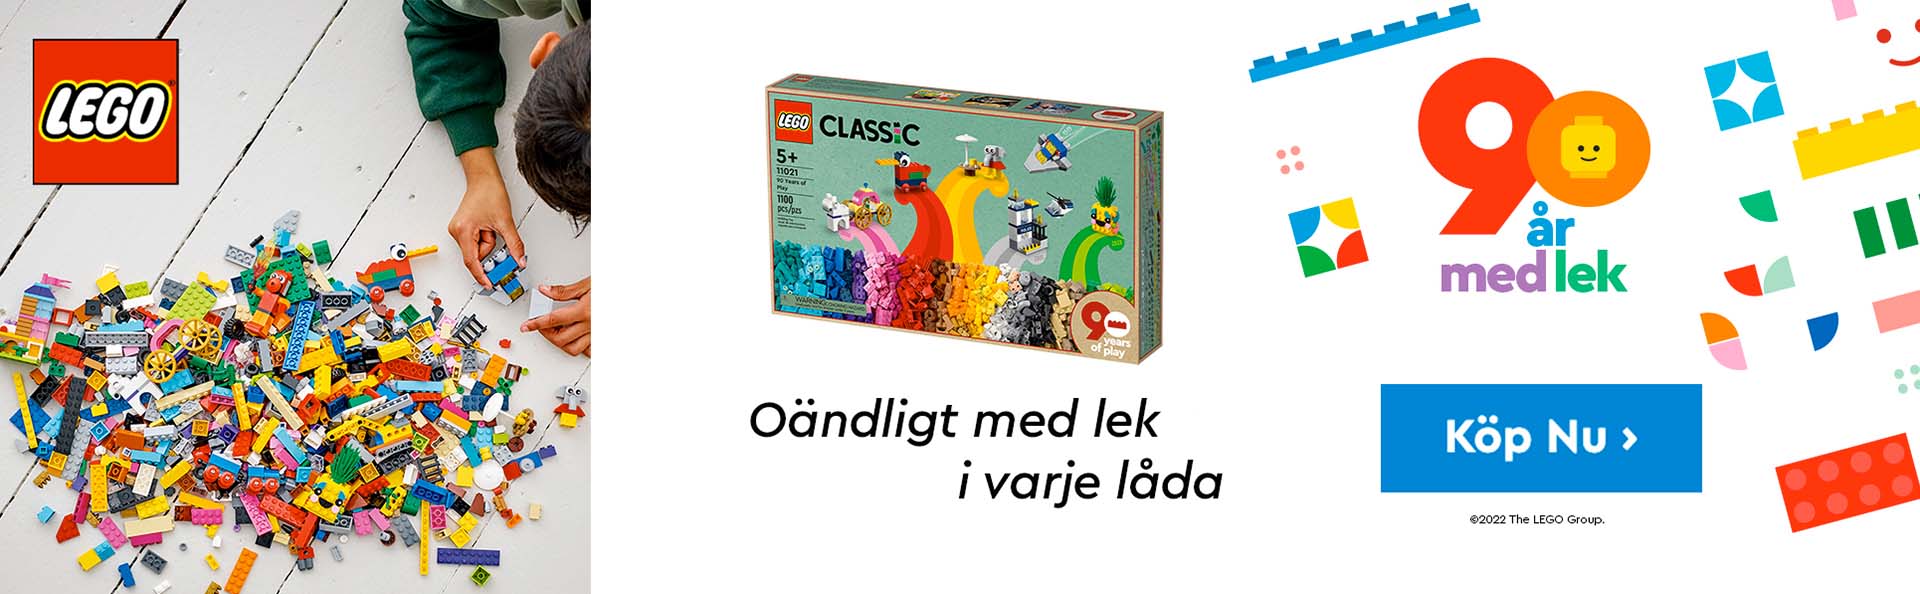 LEGO-kampanjbanner-1920x700 90th_SE.jpg